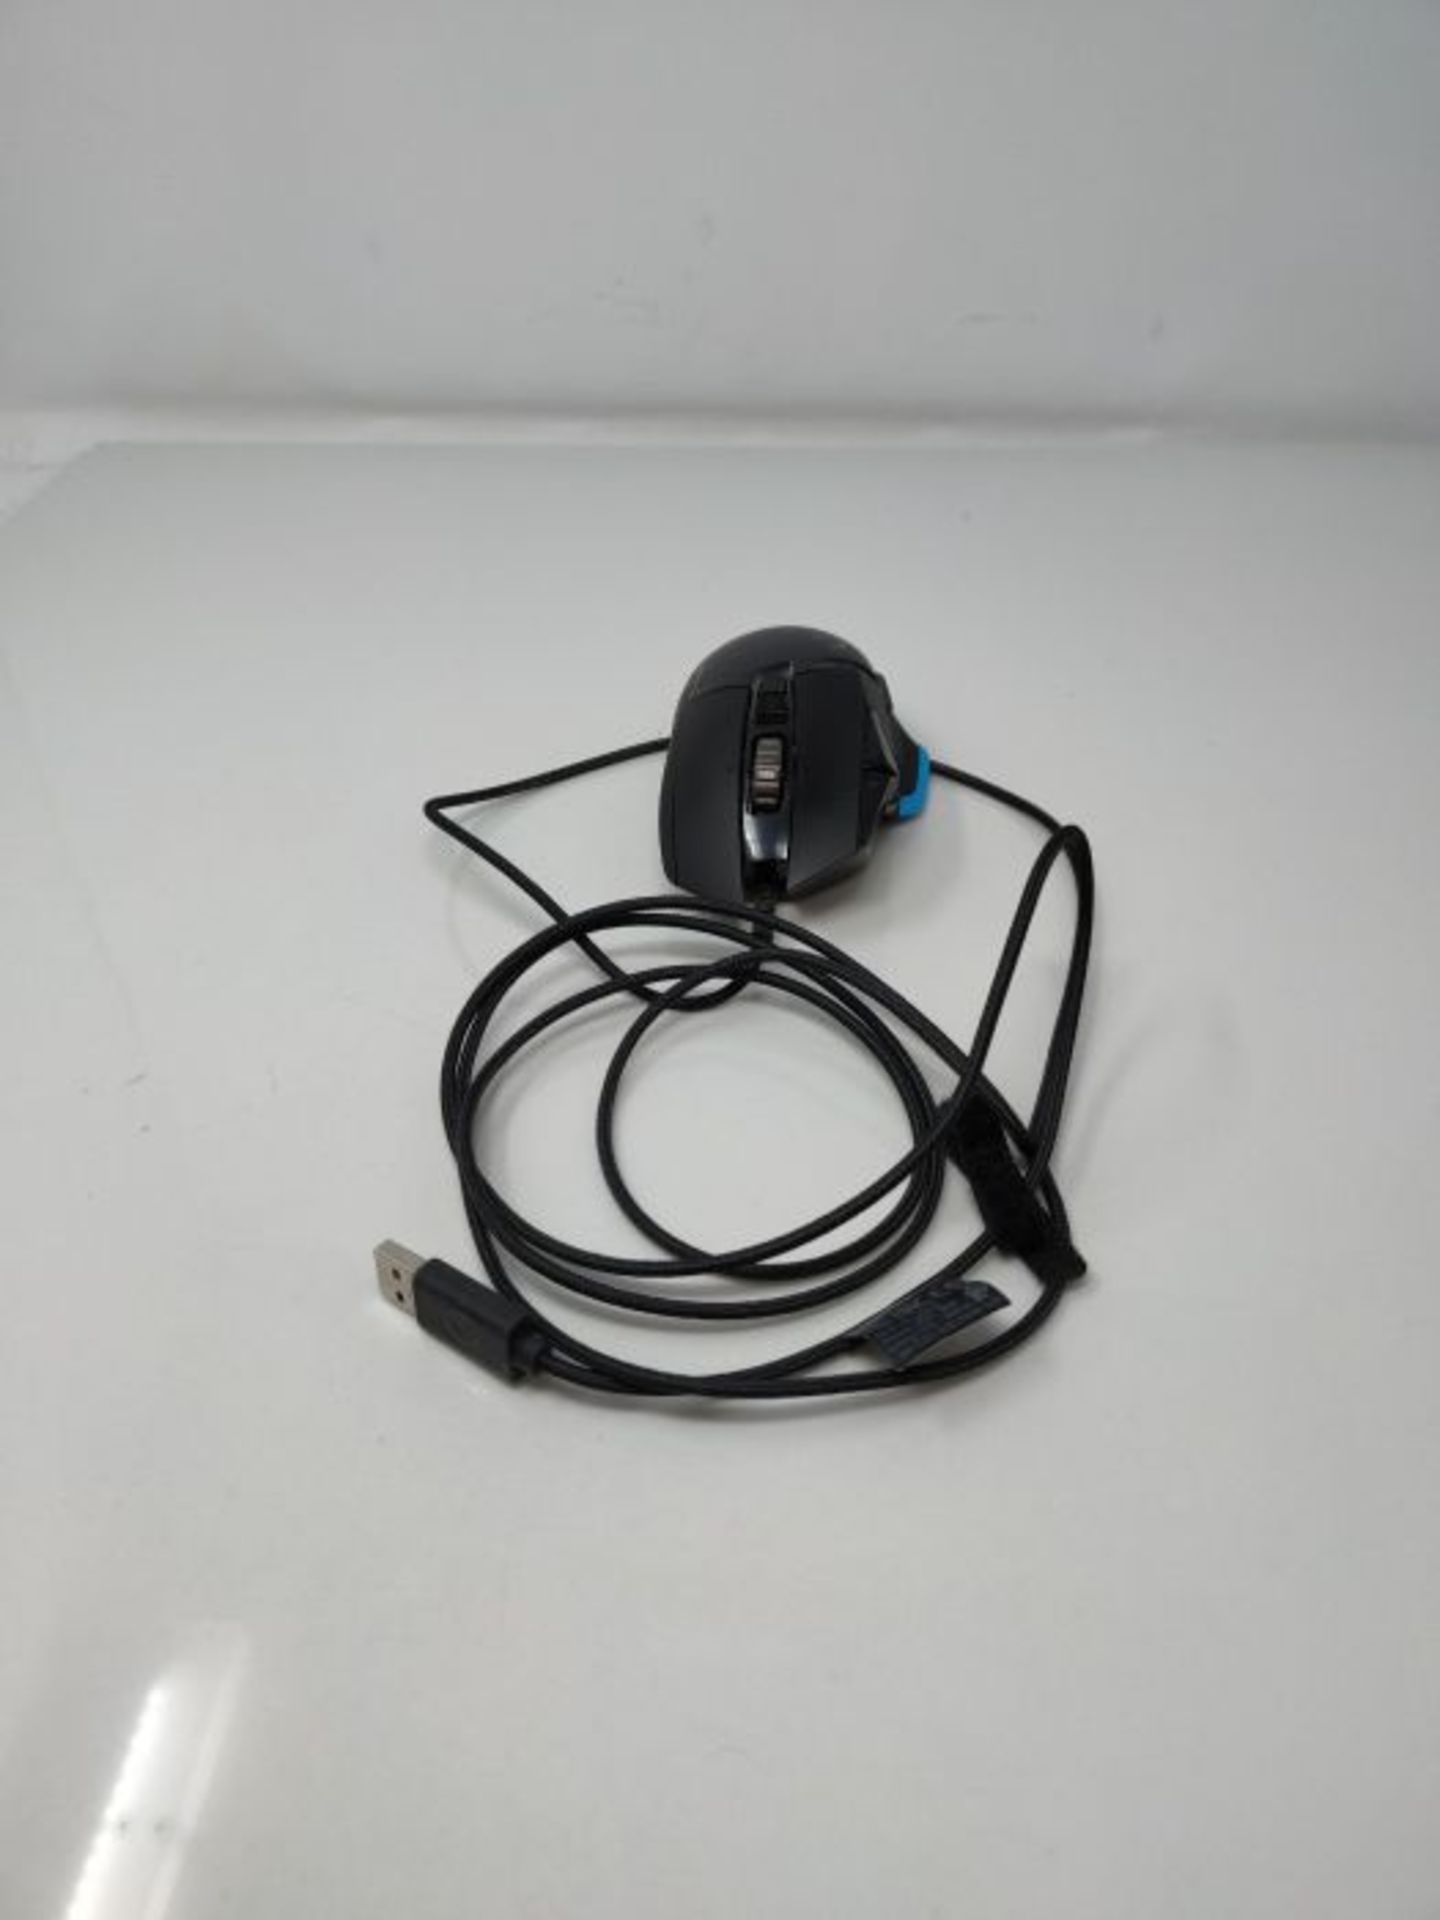 RRP £59.00 Logitech G502 HERO High Performance Wired Gaming Mouse, HERO 25K Sensor, 25,600 DPI, R - Image 3 of 3